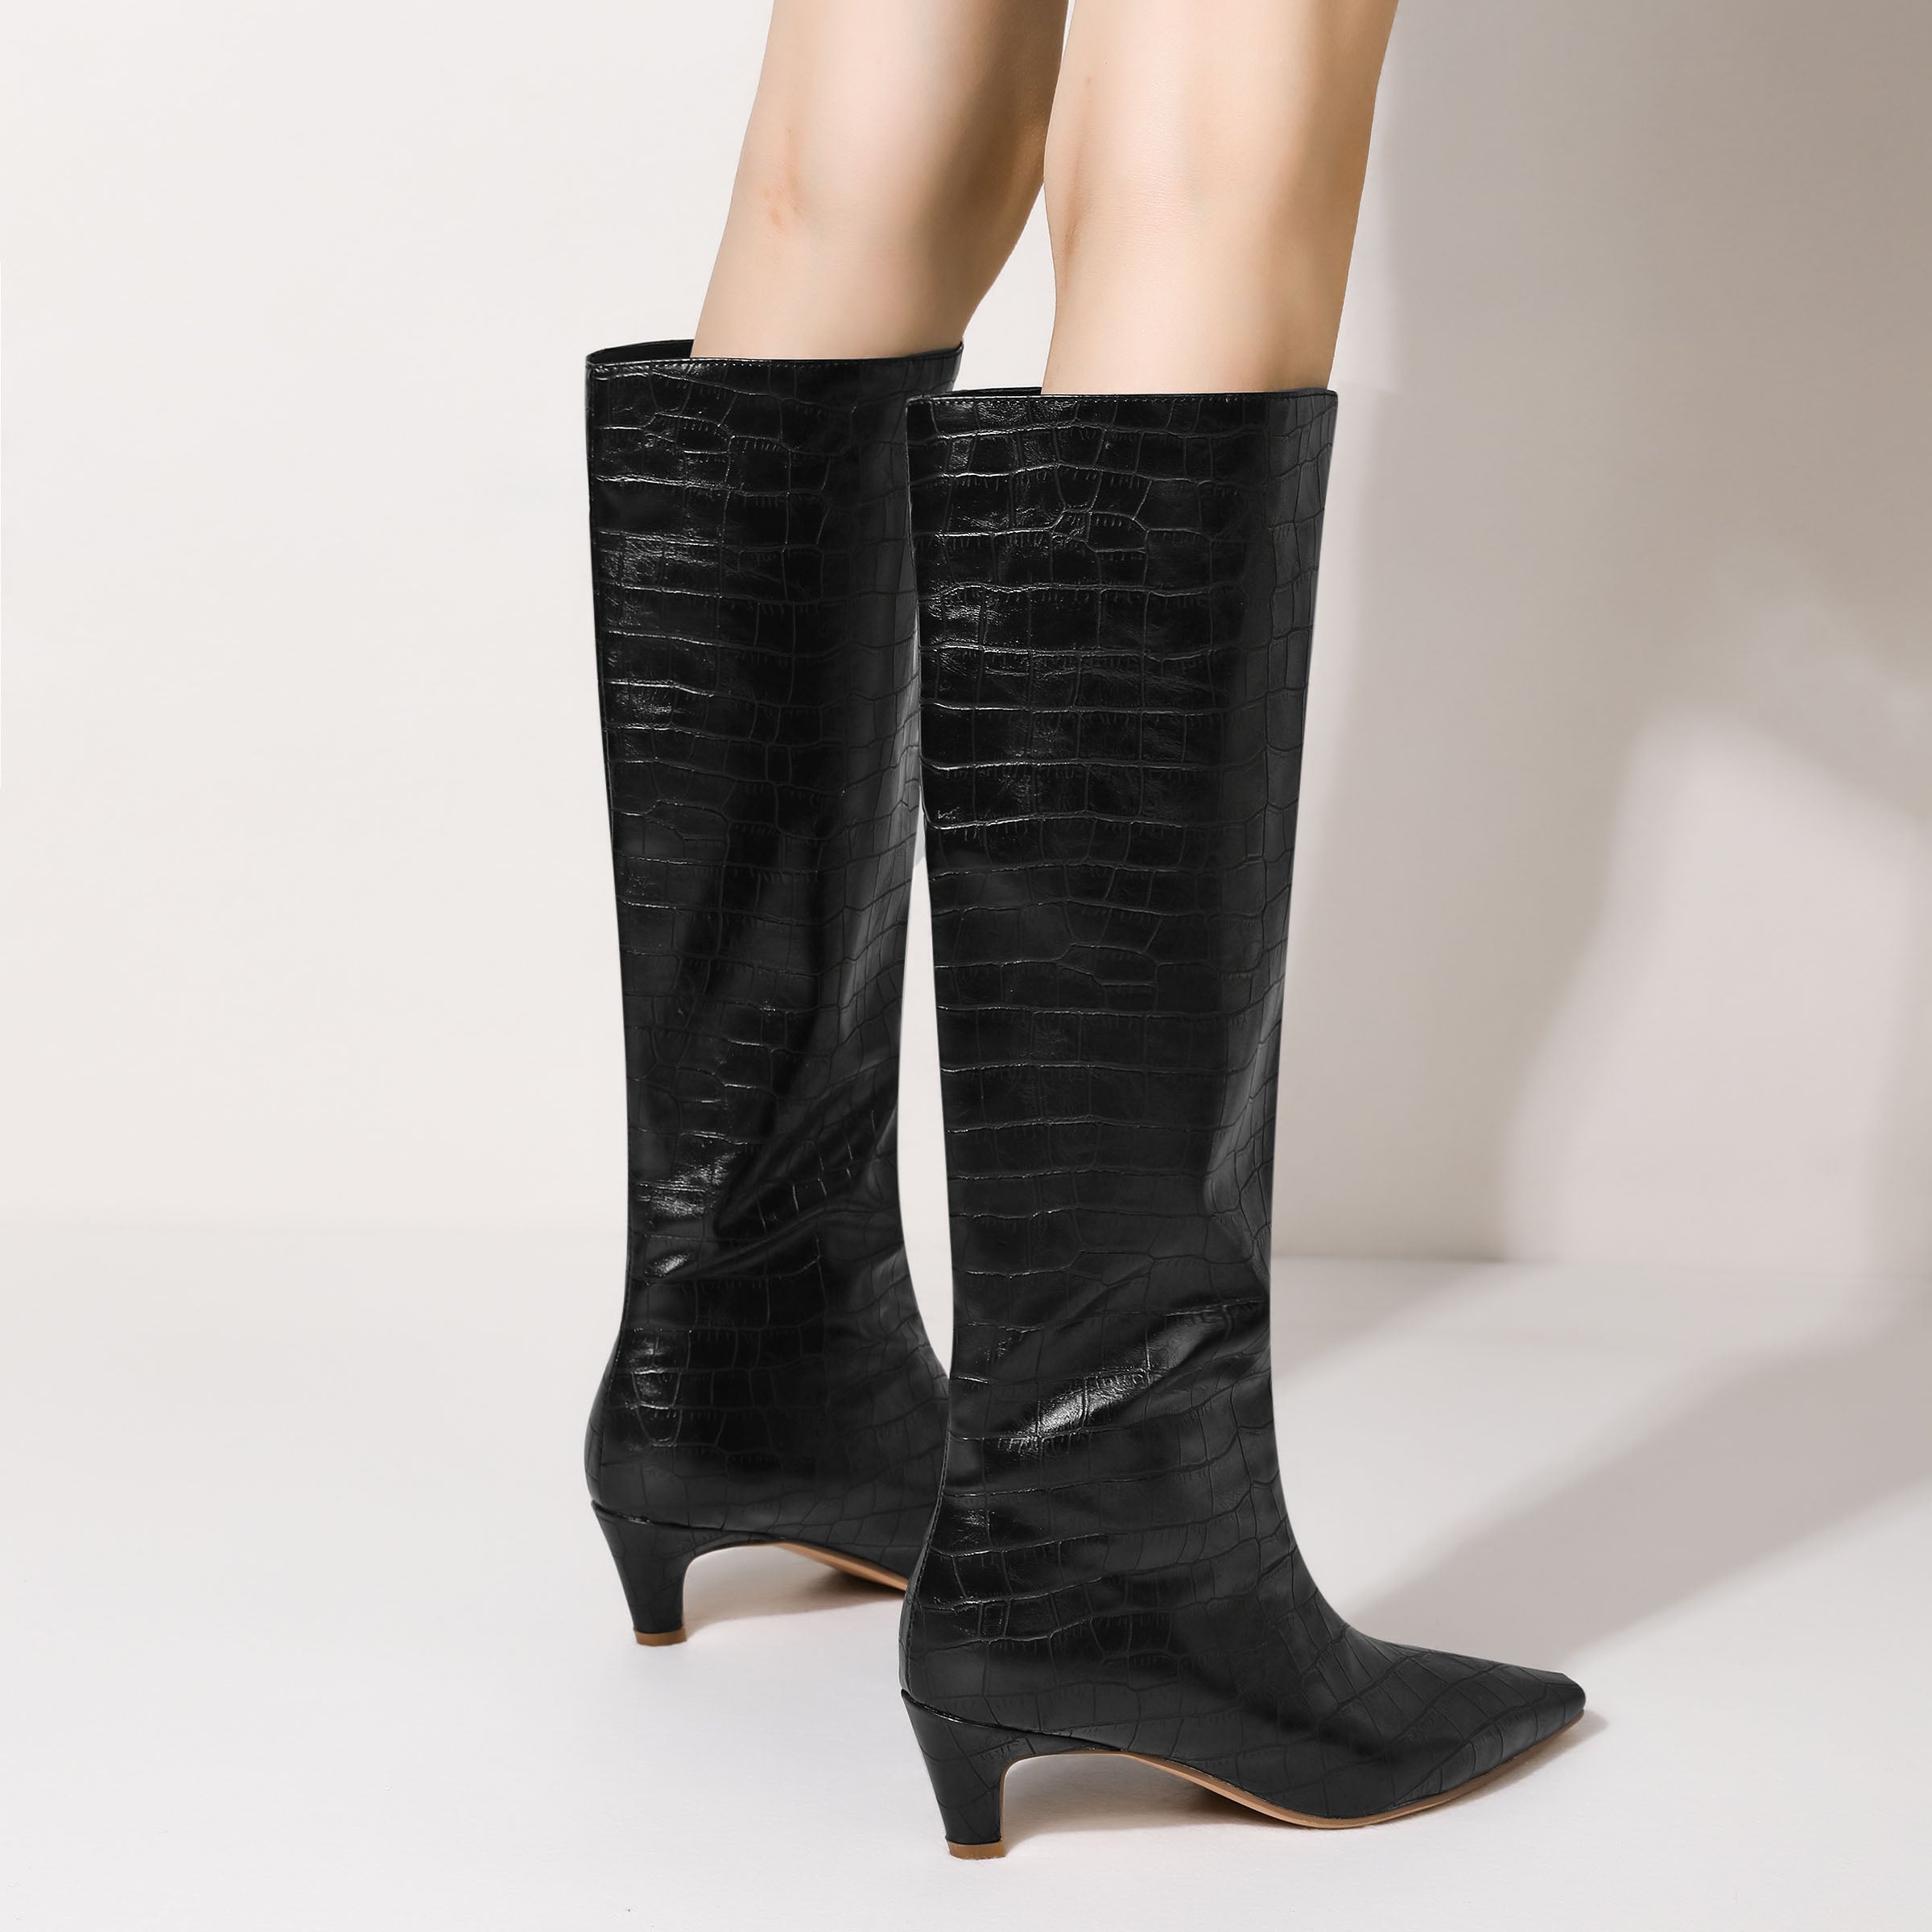 Bigsizeheels Square toe low heel boots- Black freeshipping - bigsizeheel®-size5-size15 -All Plus Sizes Available!